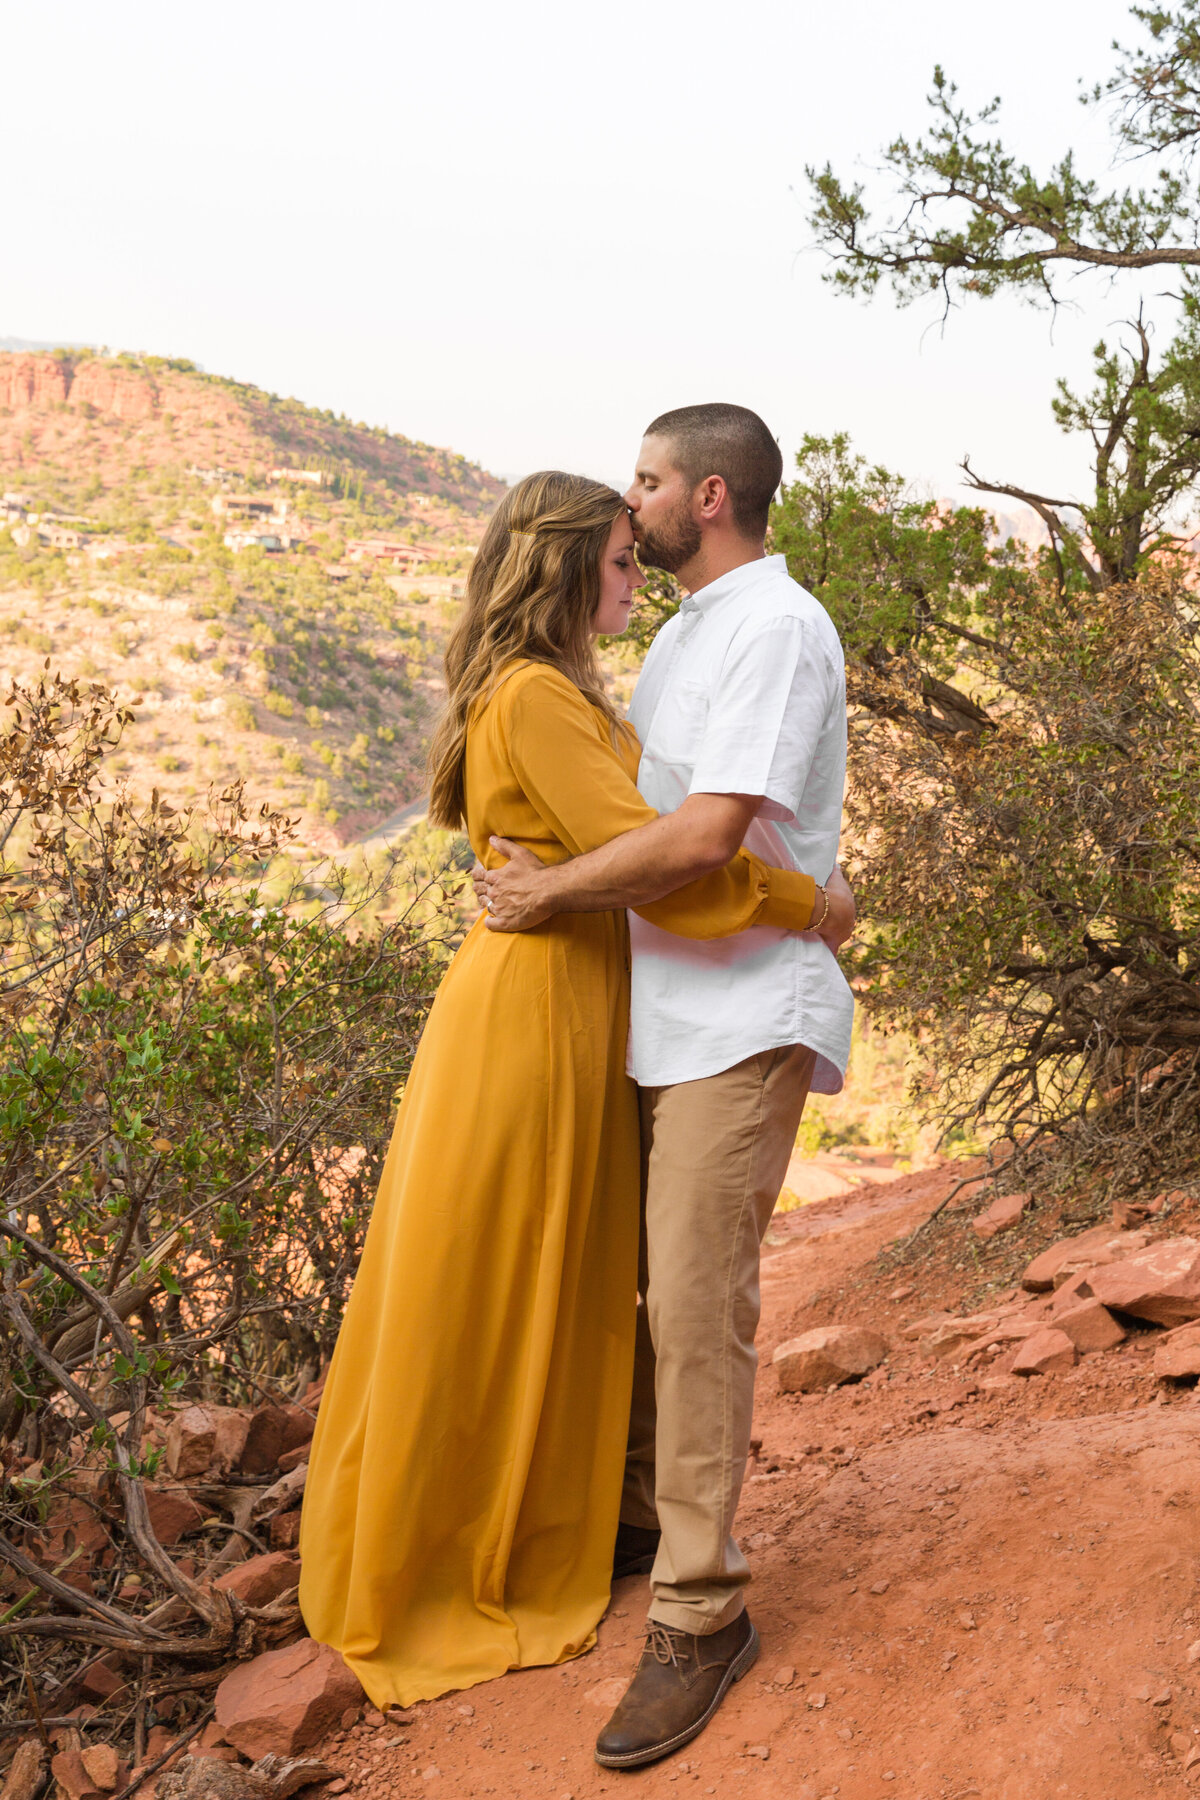 Wedding Anniversary Couple's Portrait Photography - Sedona, Arizona - Bayley Jordan Photography